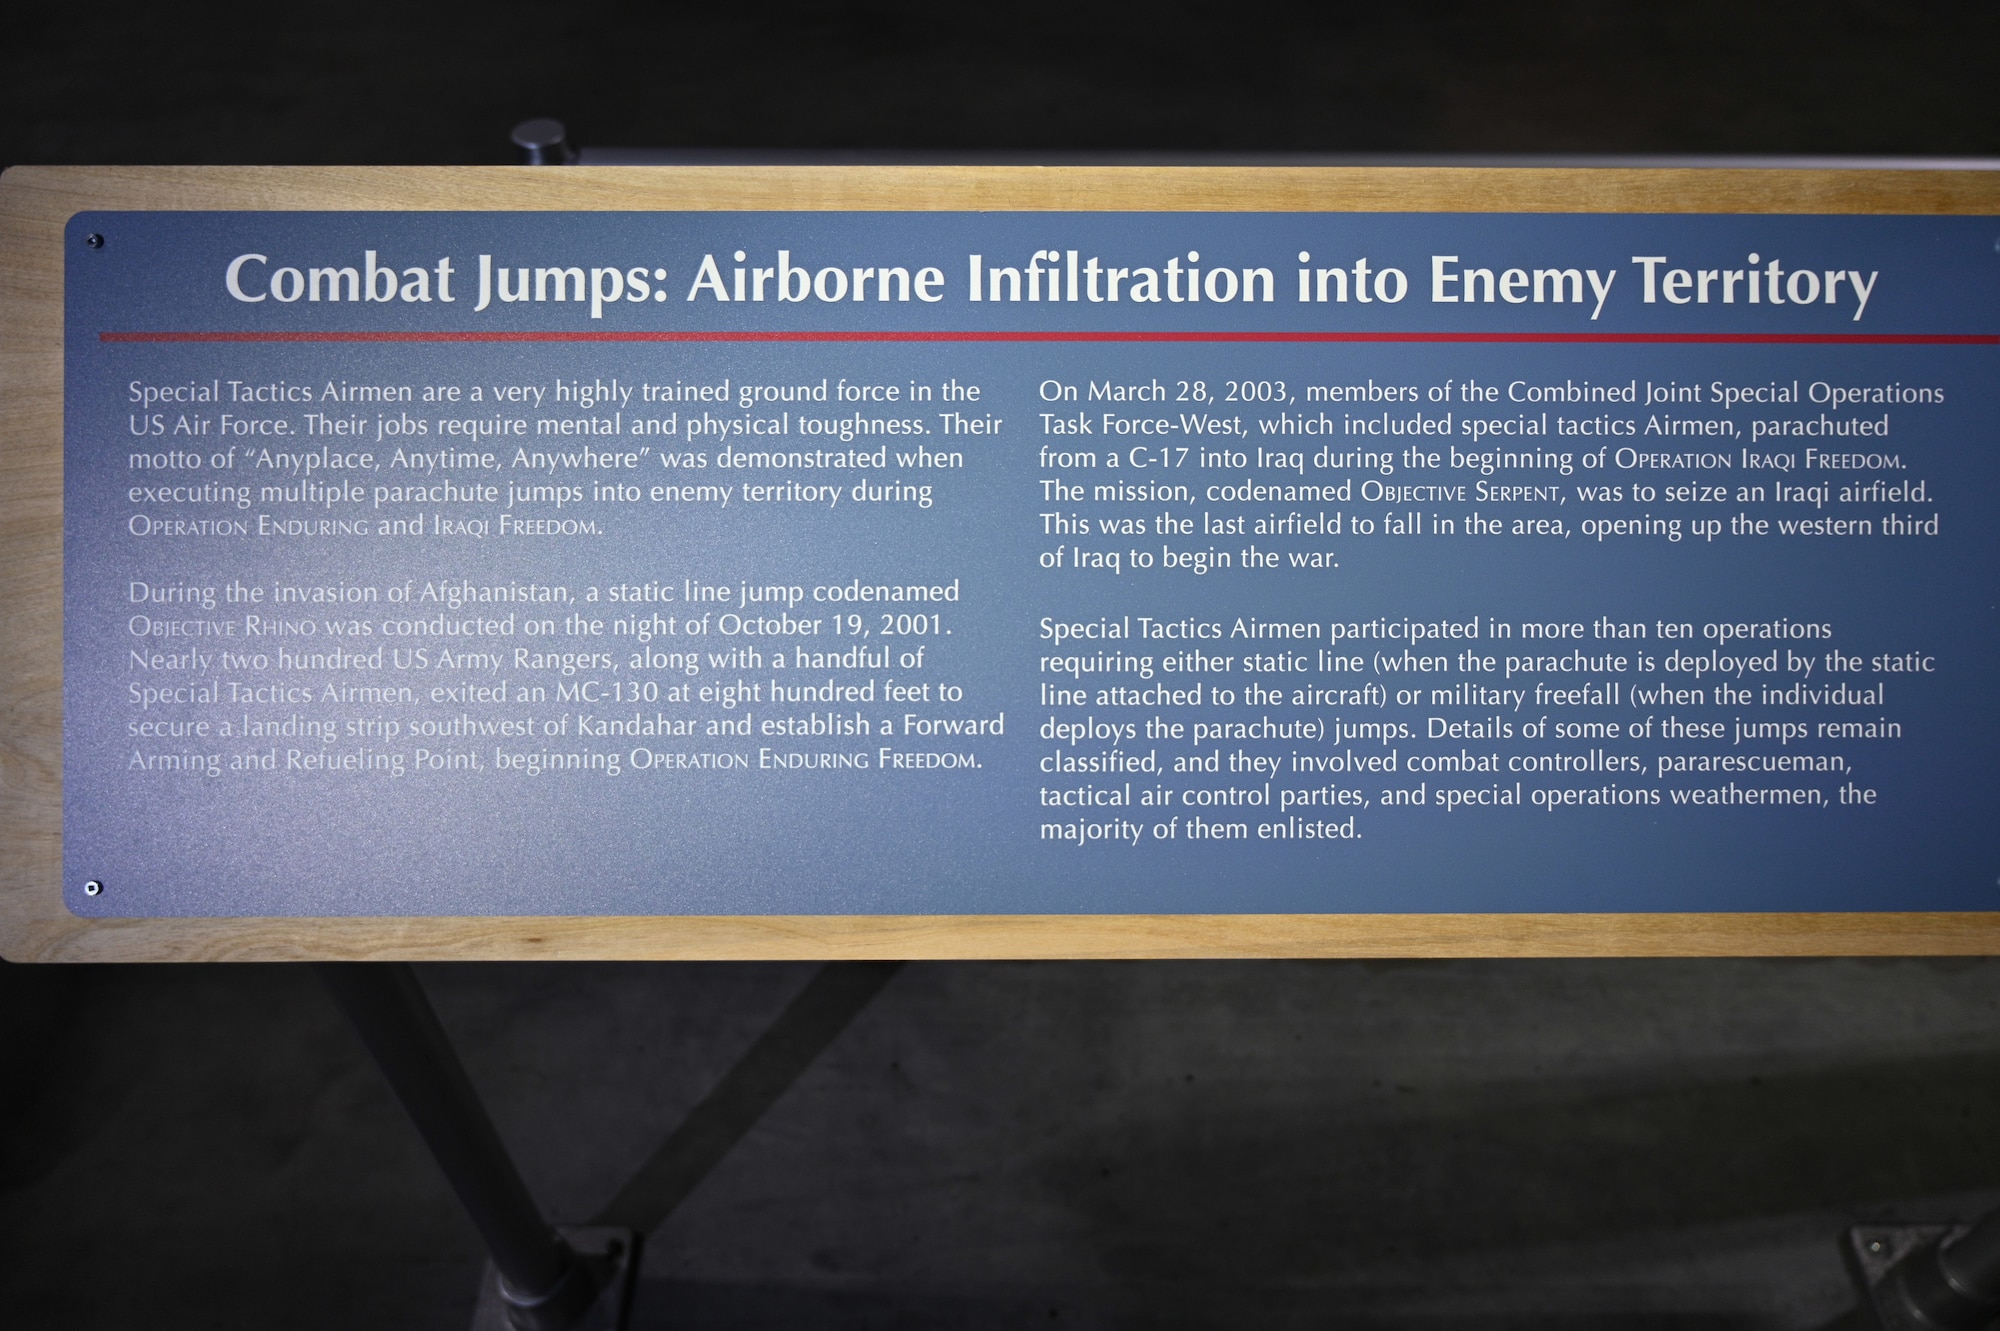 Combat Jumps exhibit